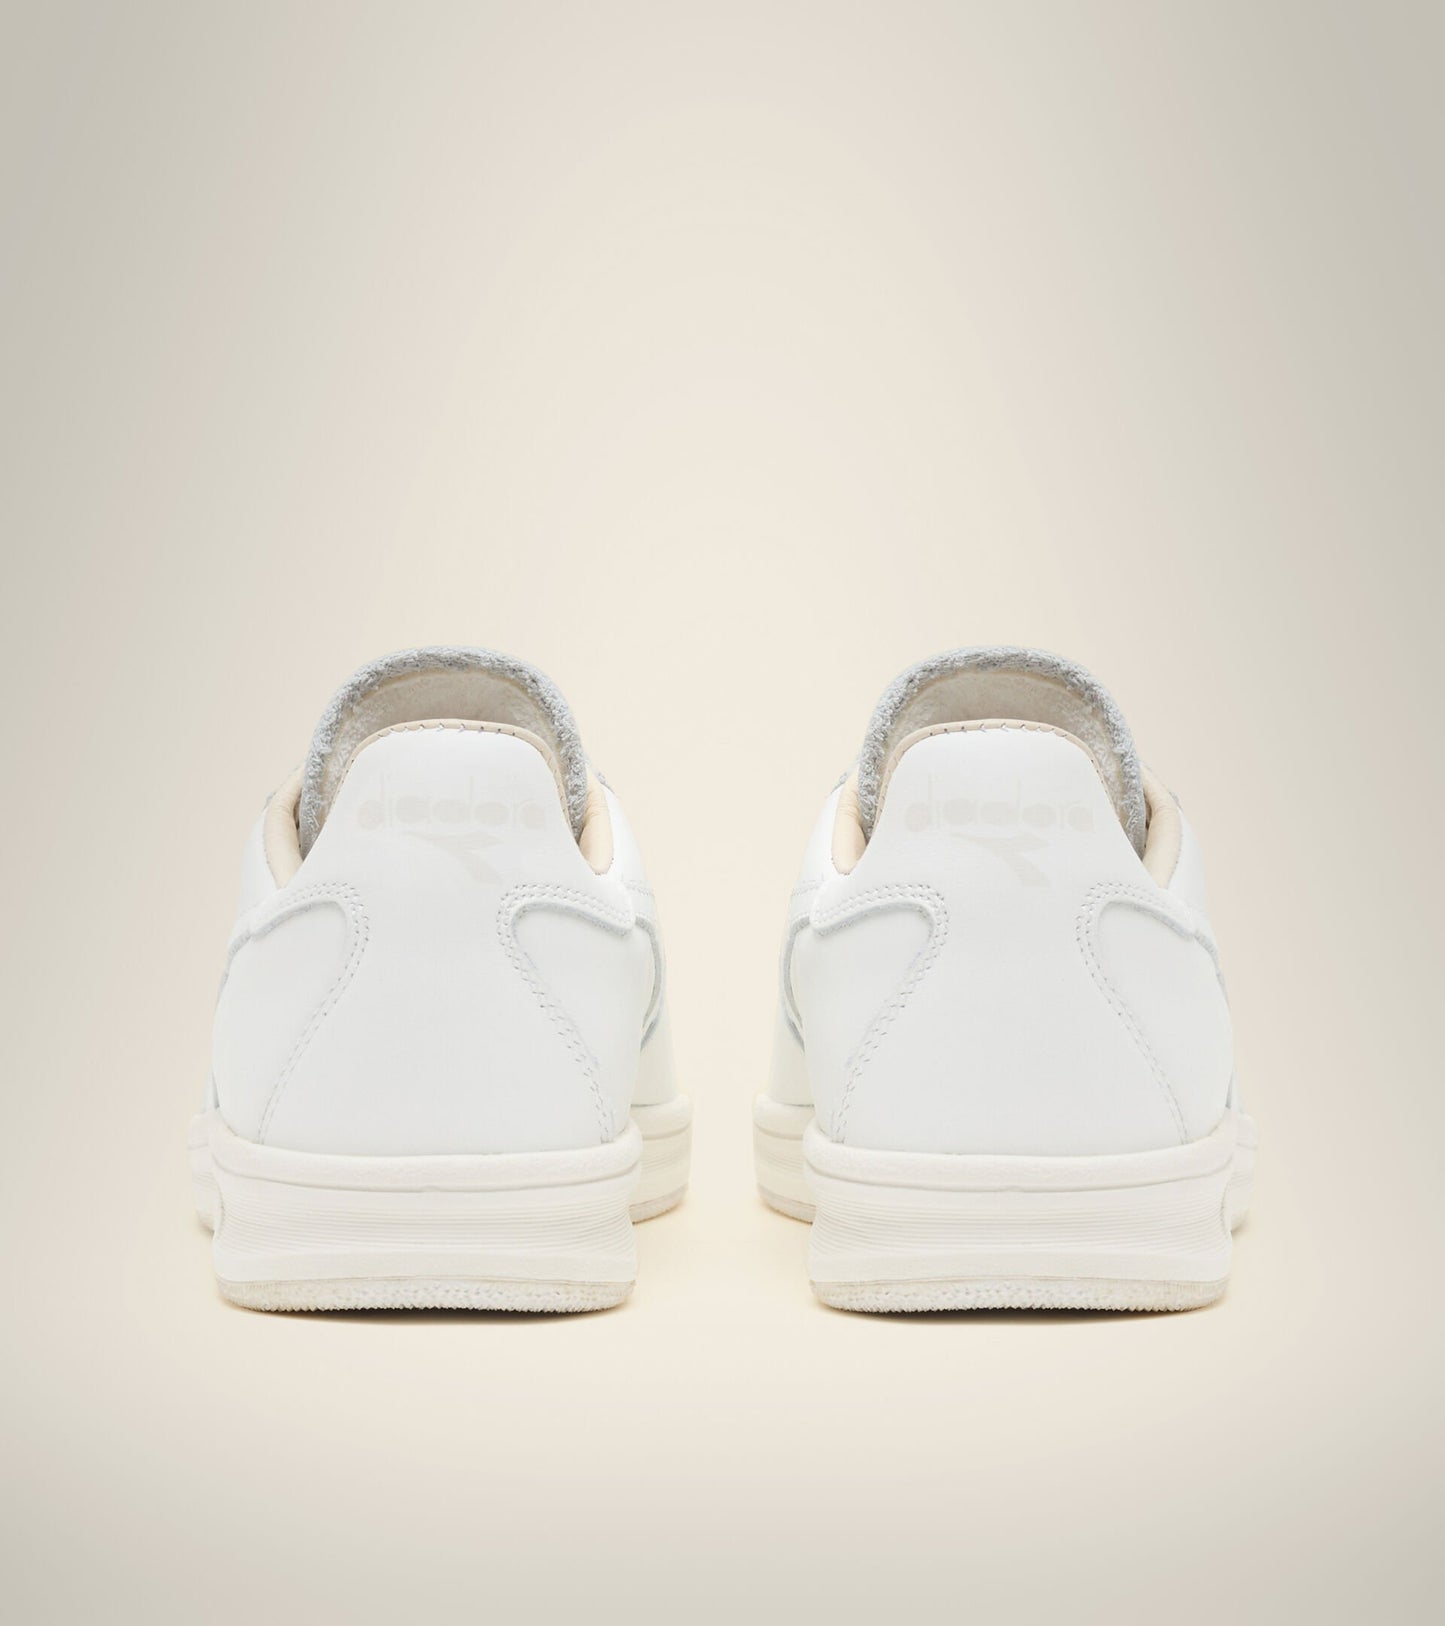 back view of white on white B. elite h italia sport diadora shoes made in italy